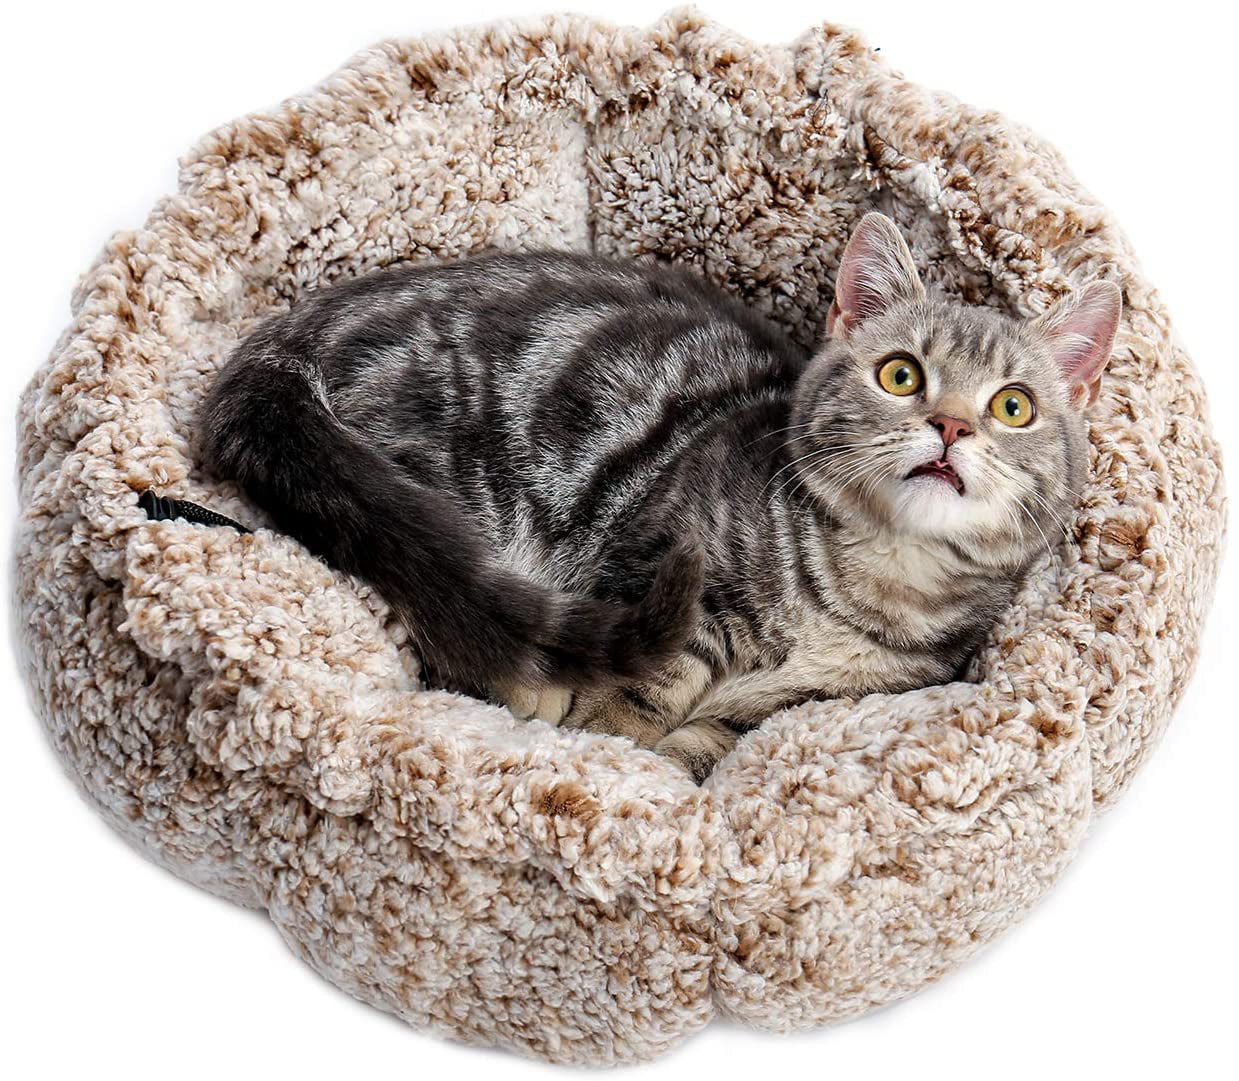 Legendog Pet Bed Creative Round Warm Soft Fluffy Plush Pet Sleeping Bed Cat Bed